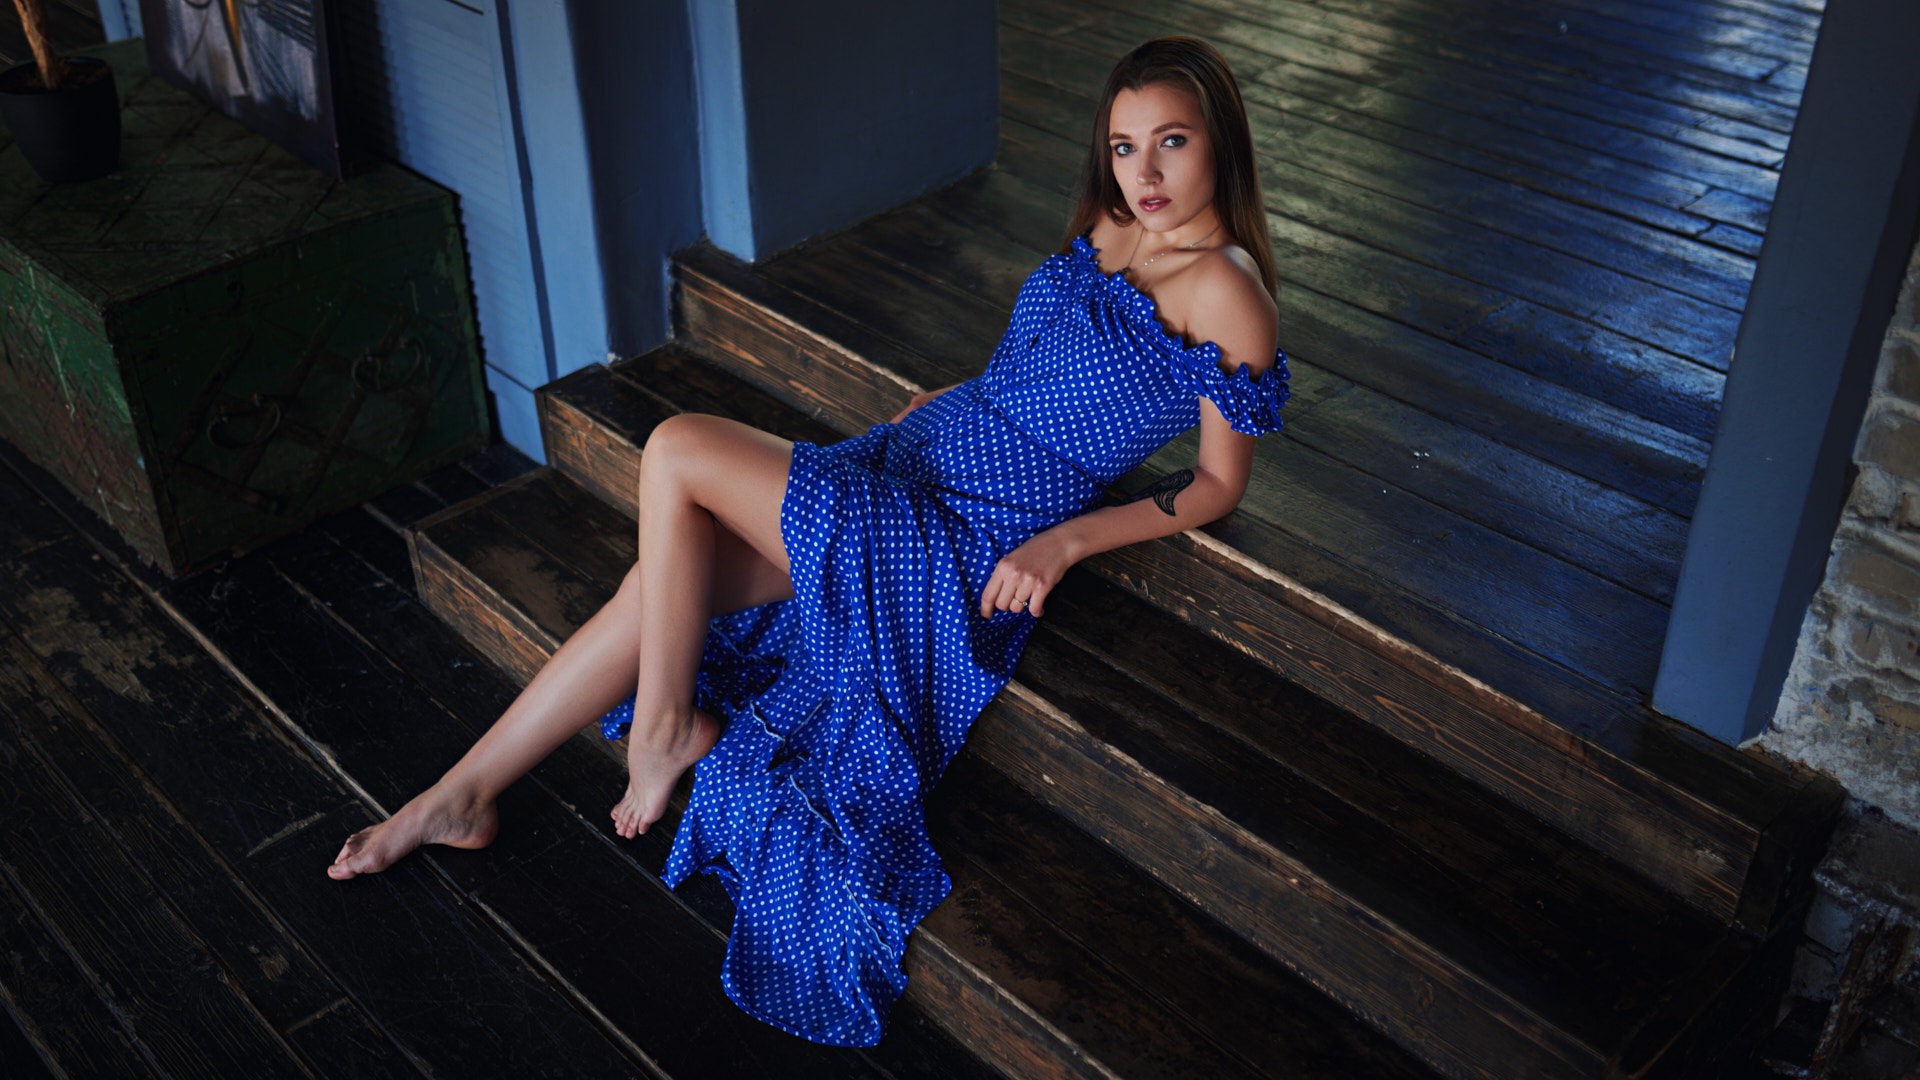 Sergey Fat Women Brunette Dress Dots Blue Clothing Legs Barefoot Stairs Looking At Viewer Model Blue 1920x1080